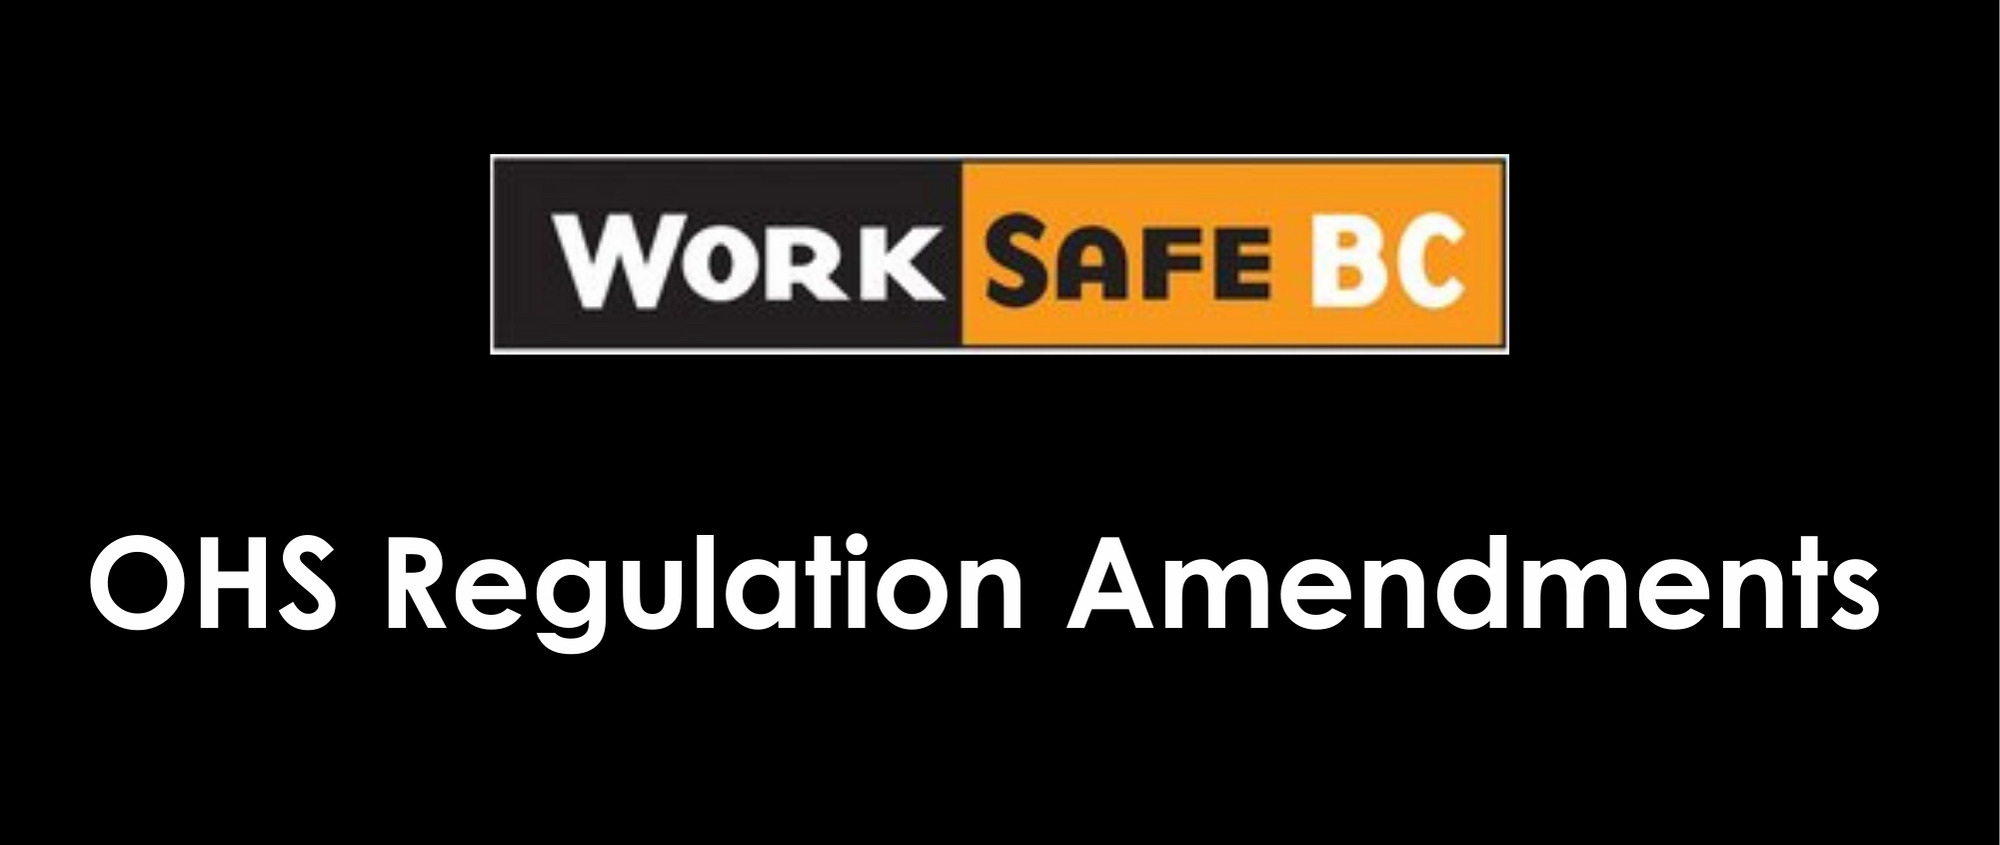 worksafebc ohs regulation amendments banner